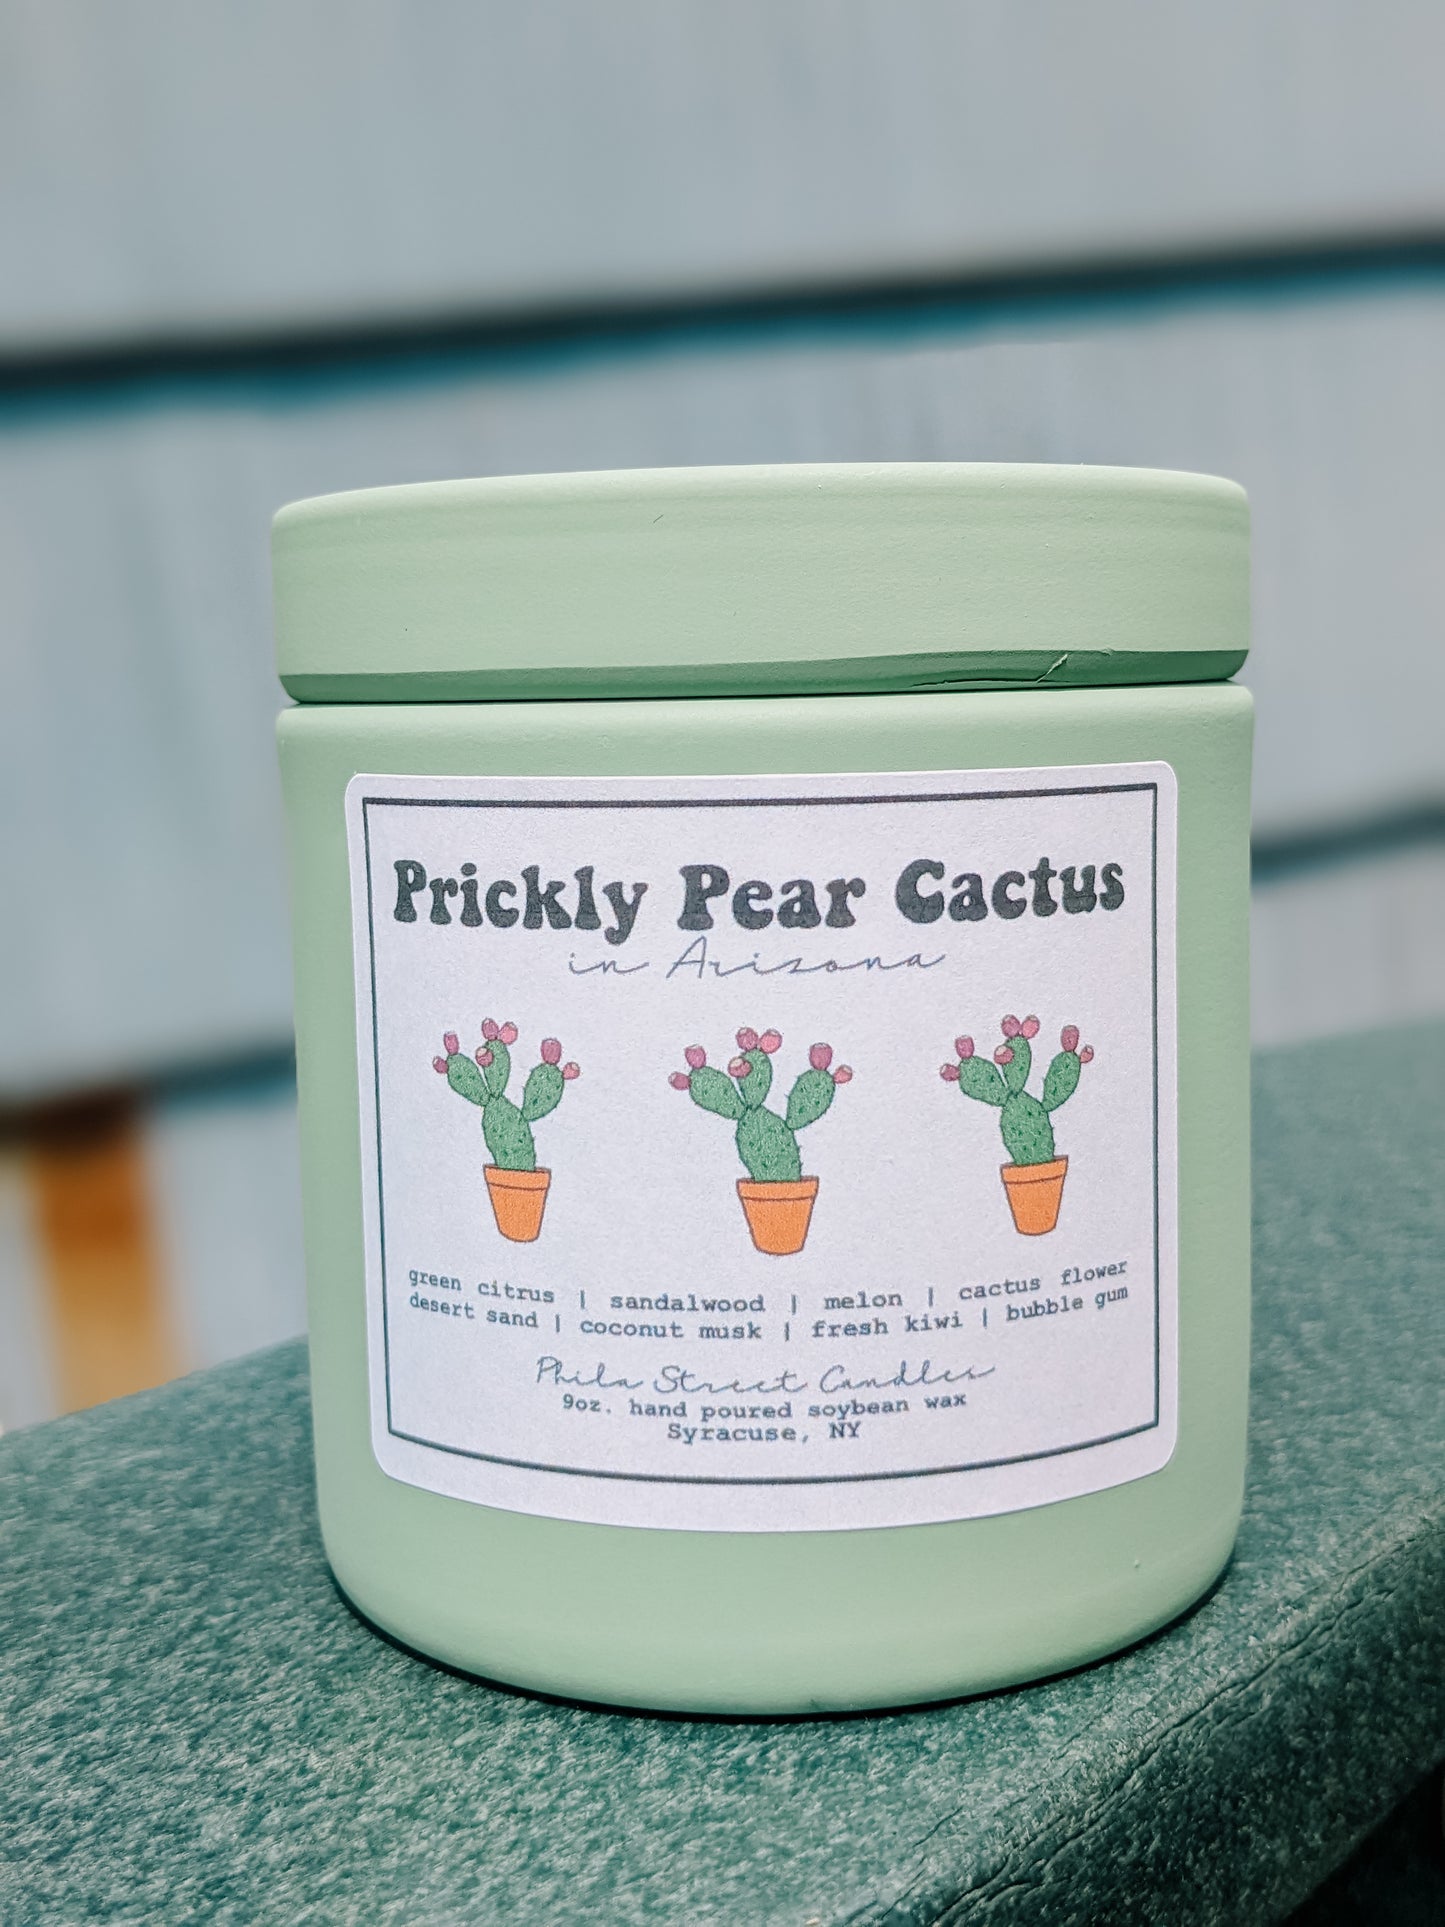 Prickly Pear Cactus (in Arizona)